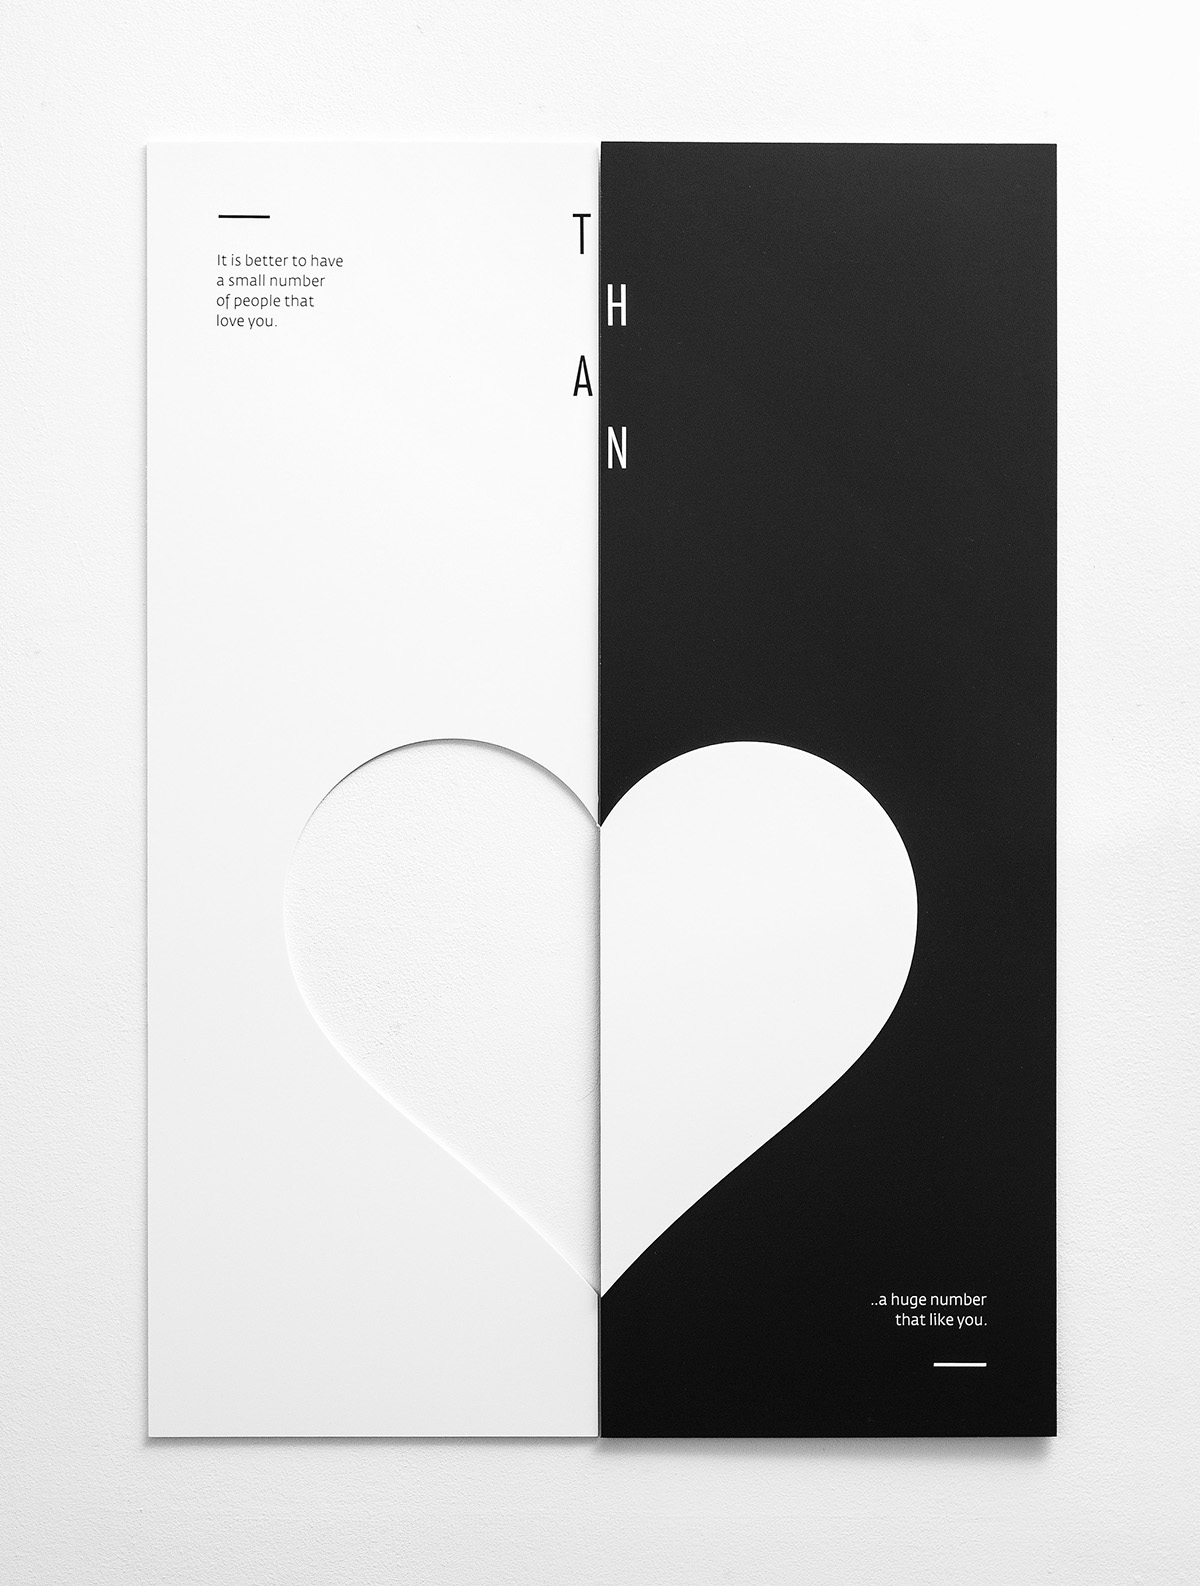 sagmeister Croatia poster Exhibition  minimalist typographic identity New York black White learn thing handmade cut paper